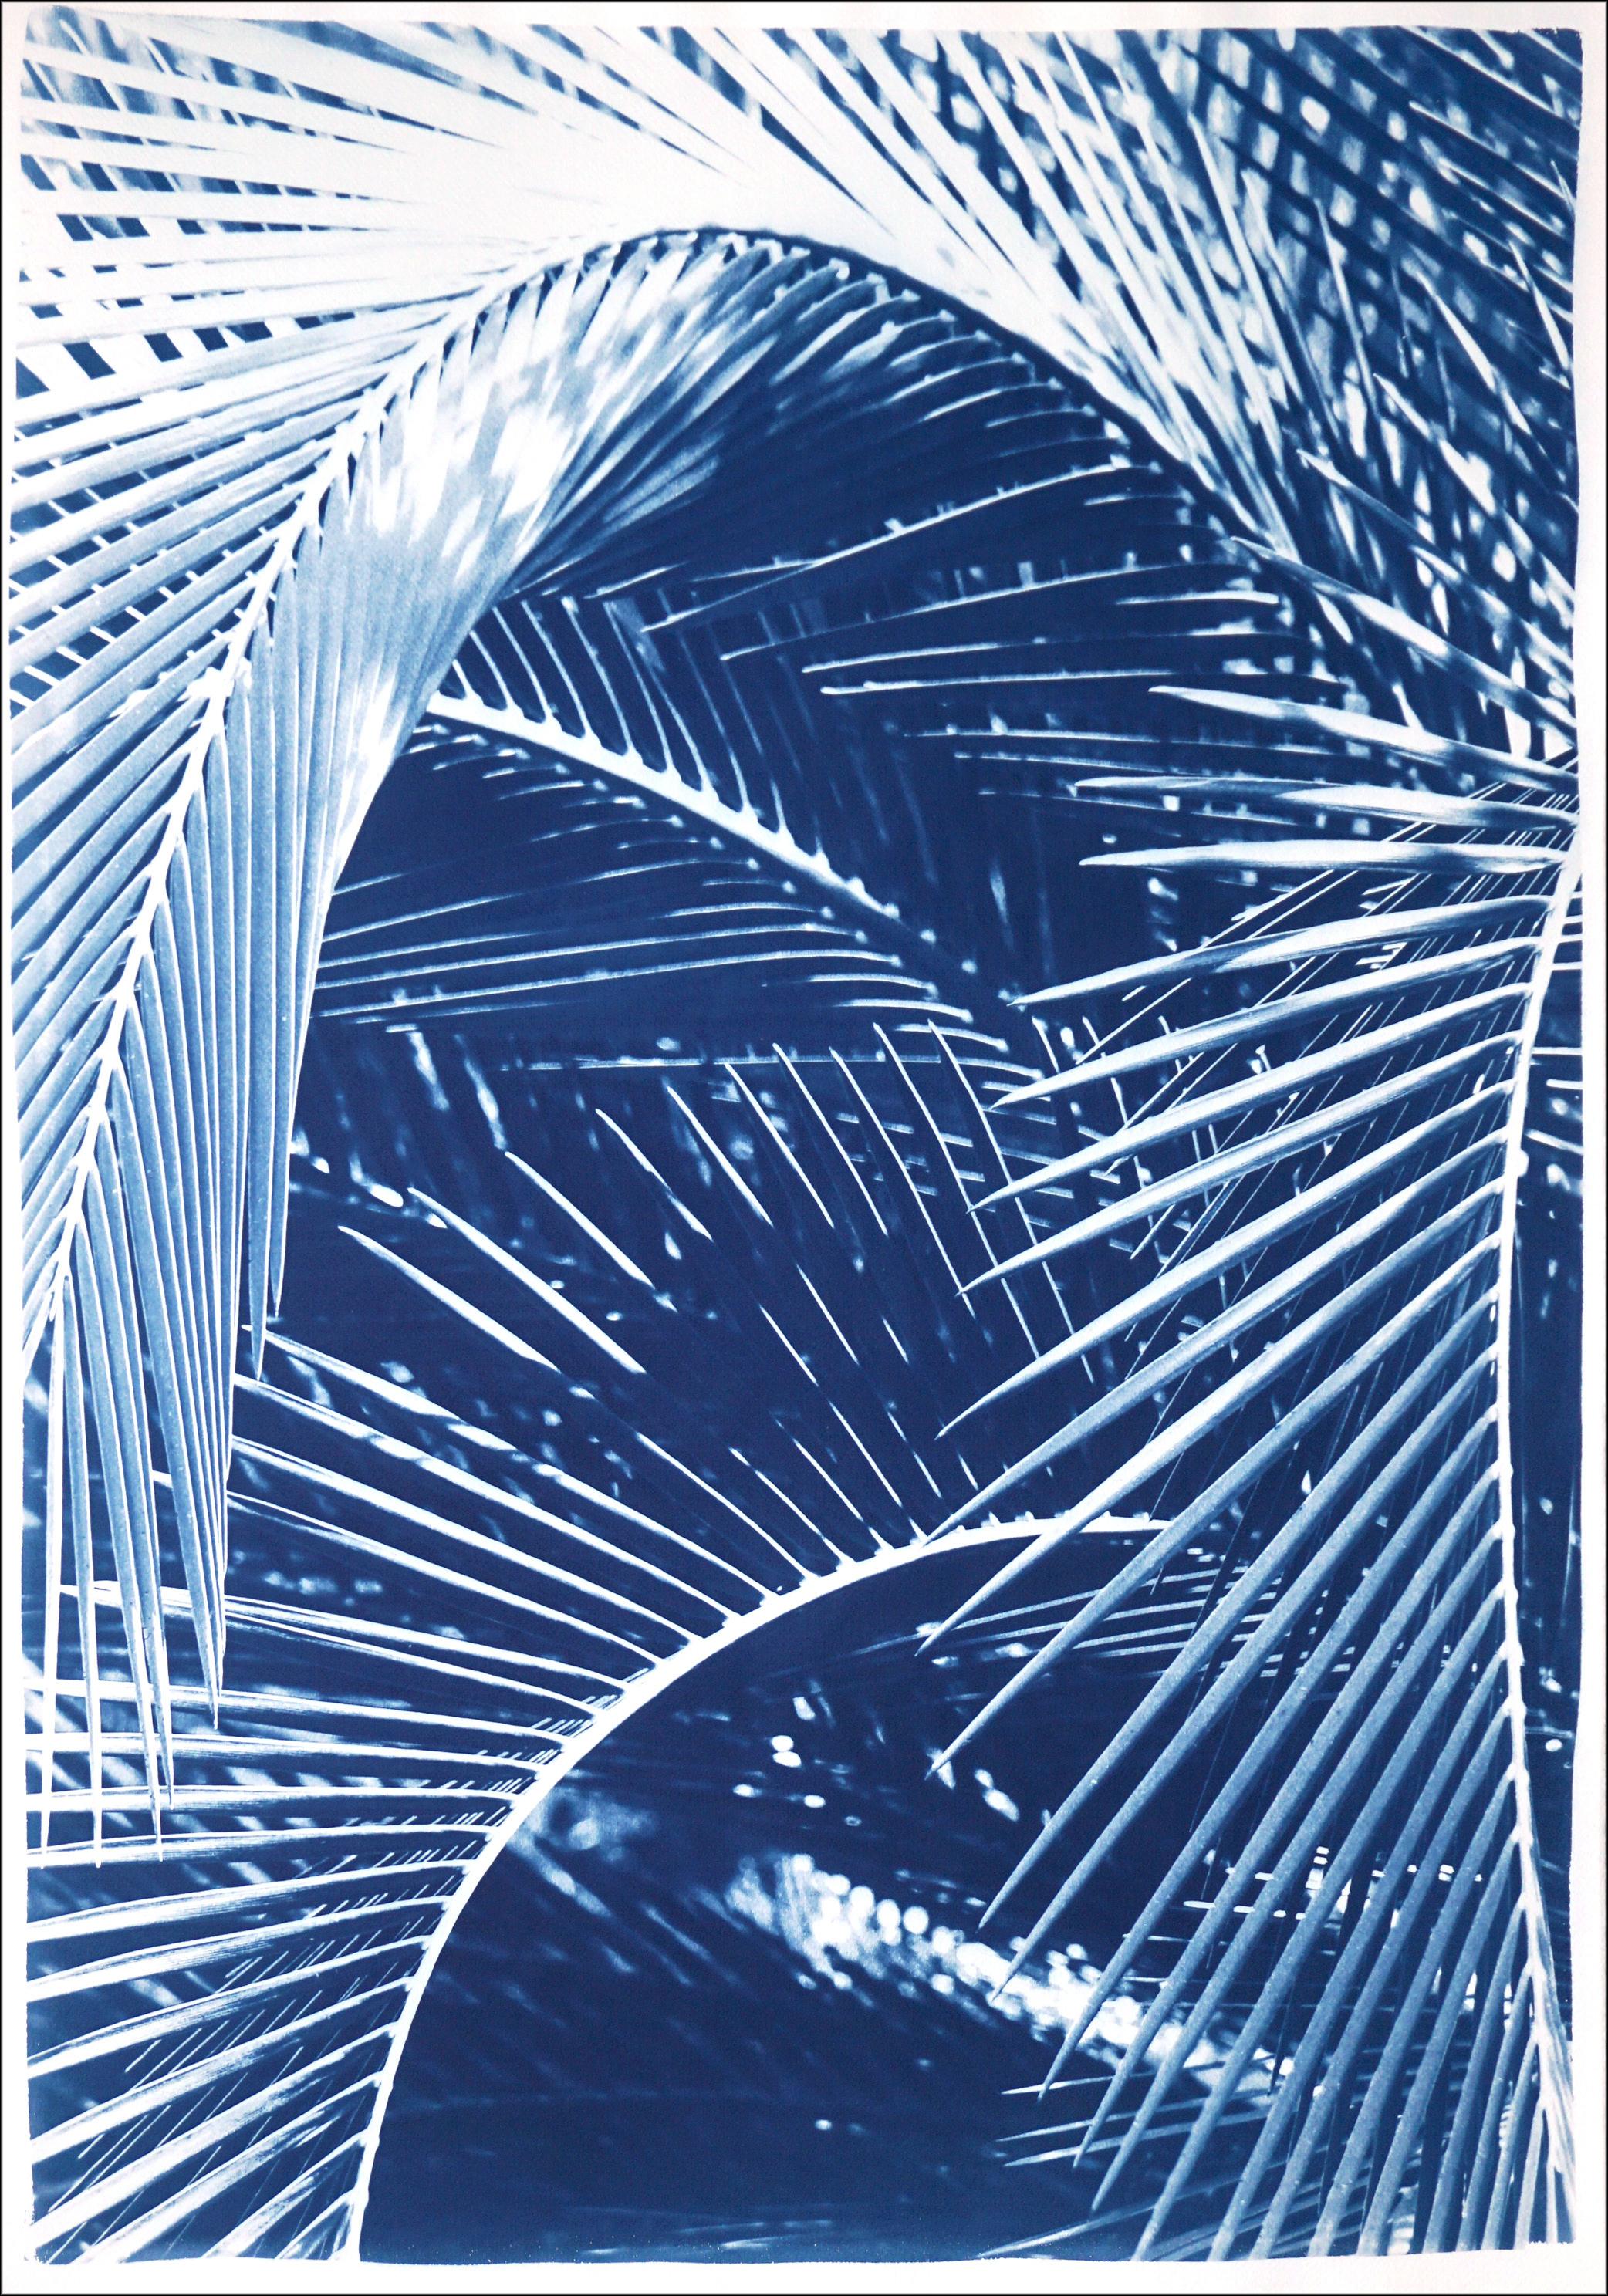 Kind of Cyan Still-Life Photograph – Botanic Garden Palmenblätter, handgefertigter tropischer Stillleben-Druck in Blautönen